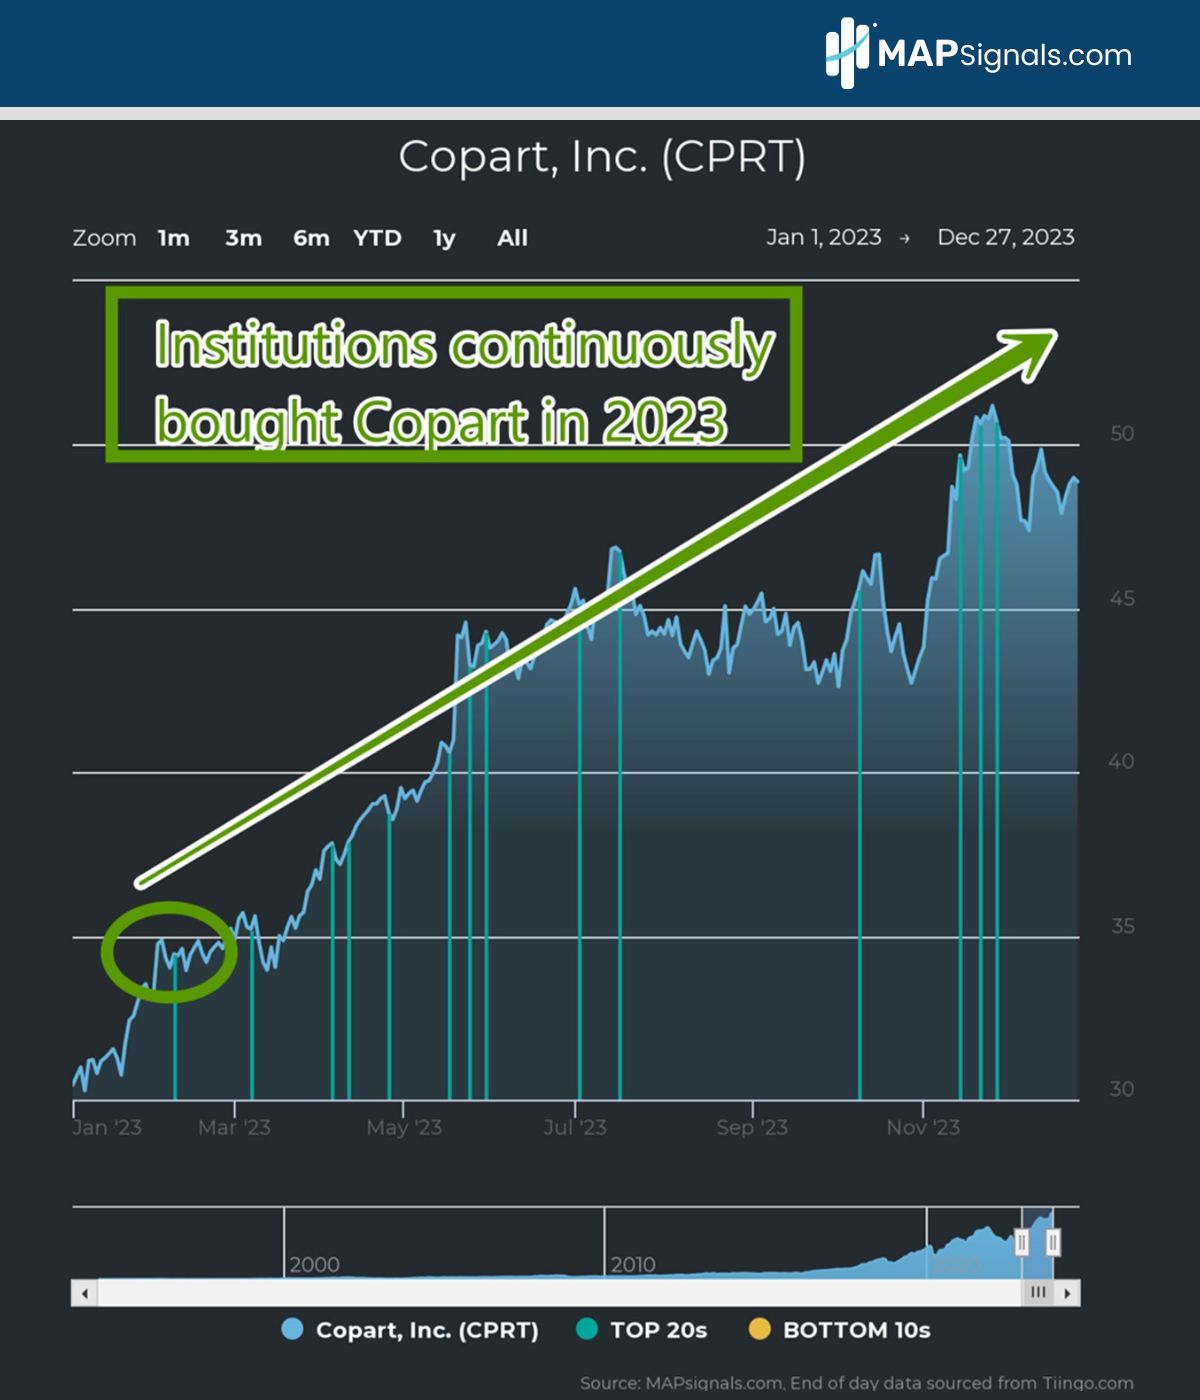 Copart, Inc. (CPRT) | MAPsignals